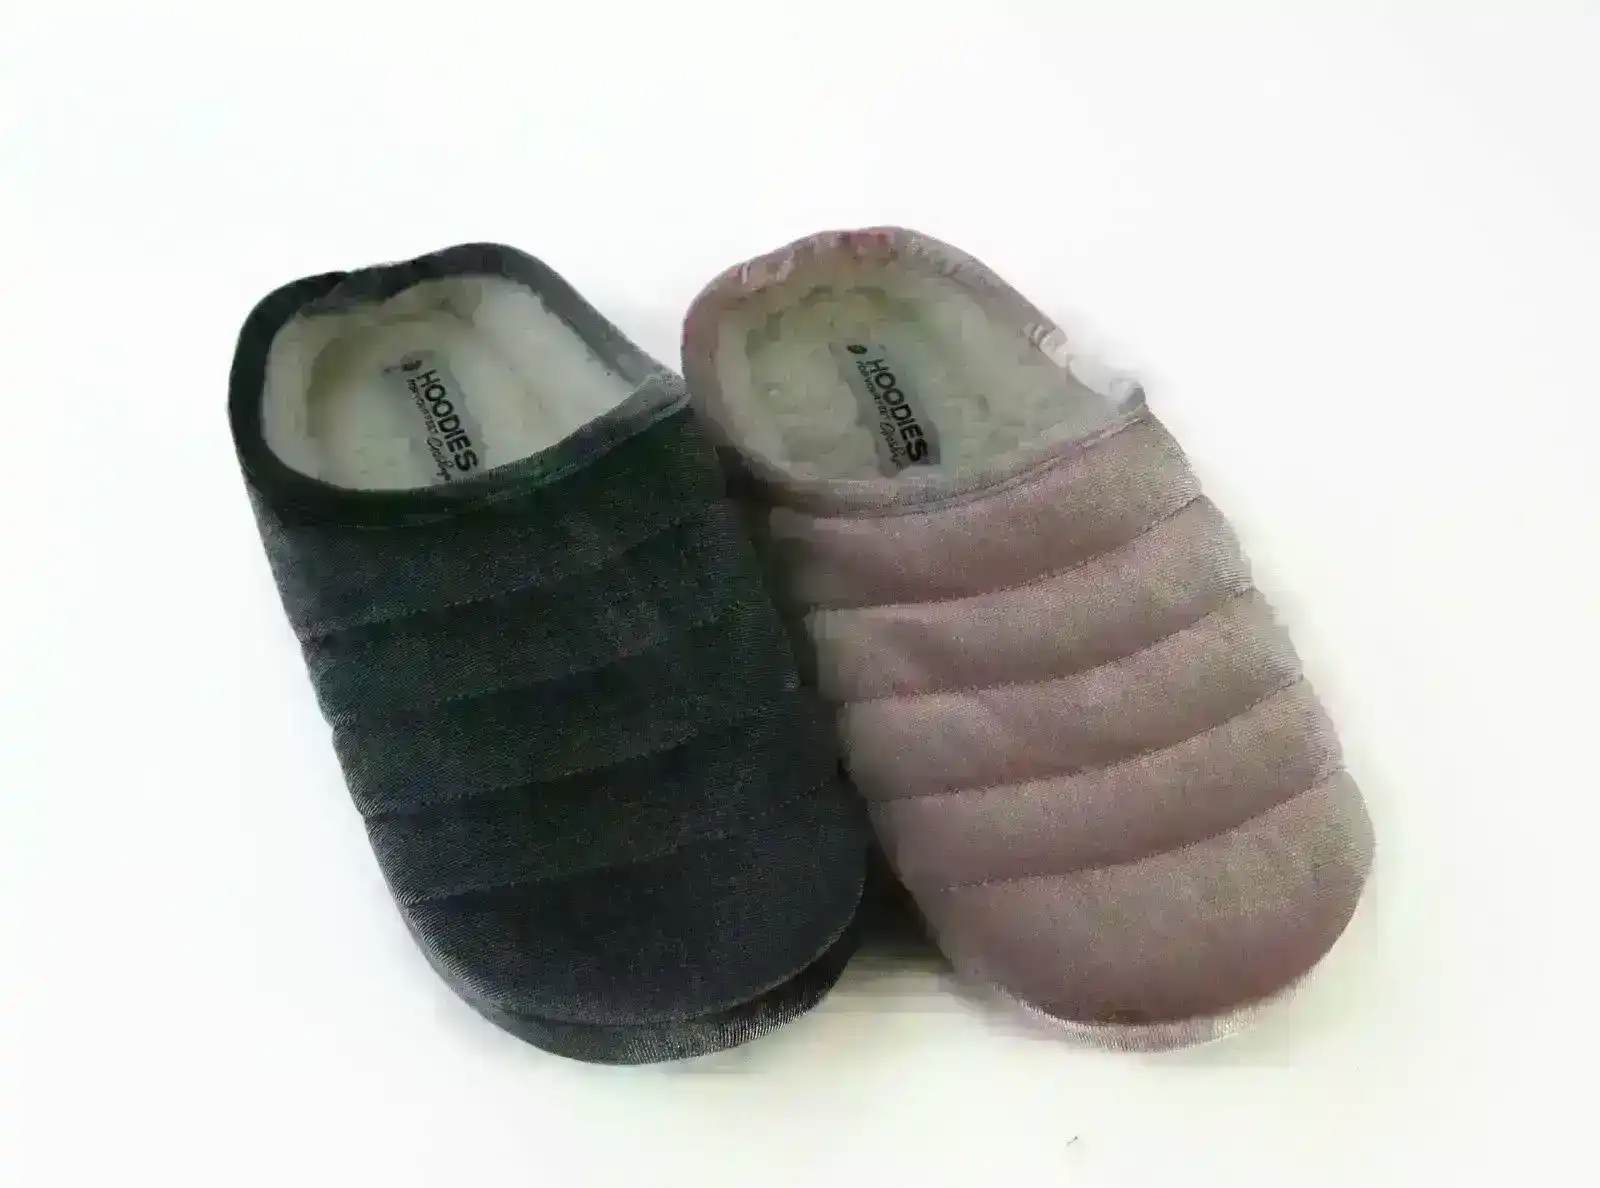 Womens Grosby Hoodies Slip On Pink Dark Grey Puffer Slippers - Size S M L Xl